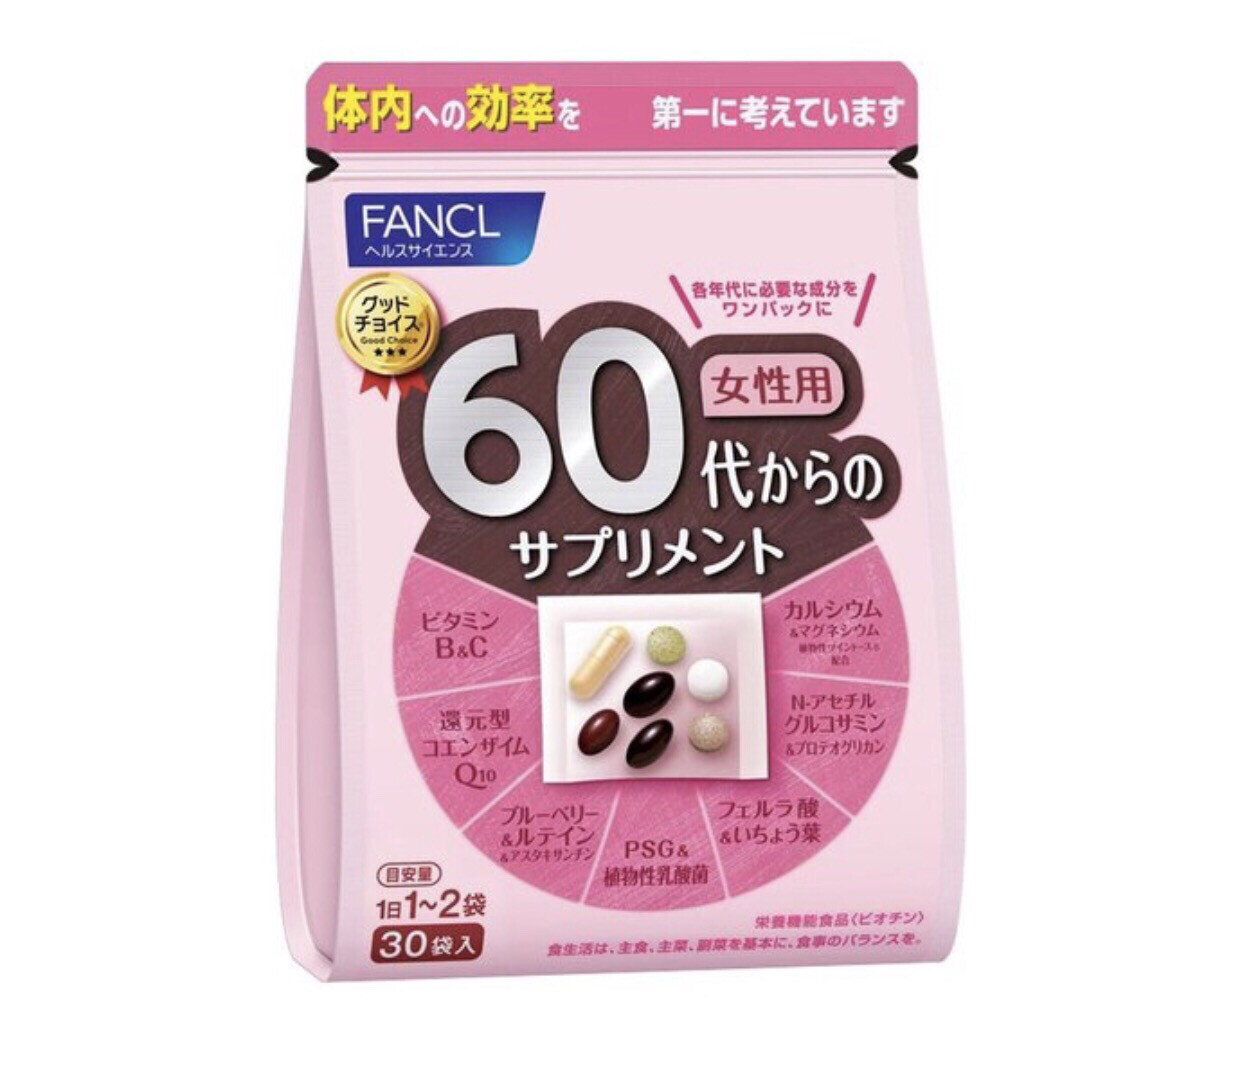 Fancl Good Choice Для женщин от 60 лет